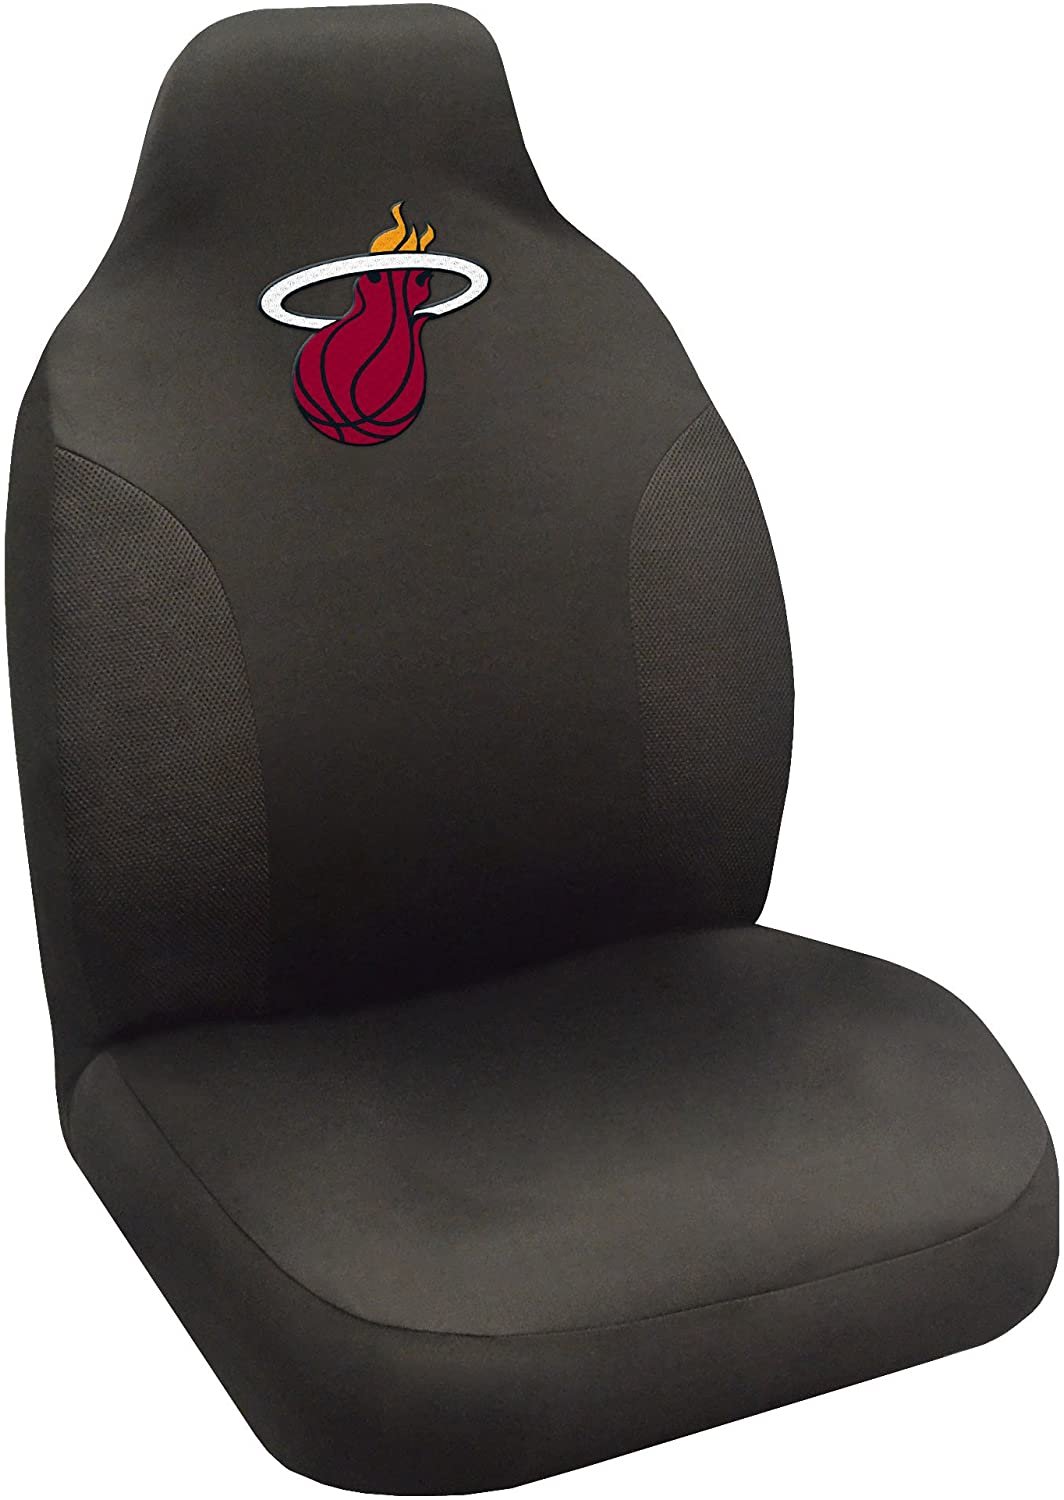 NBA - Miami Heat Embroidered Seat Cover